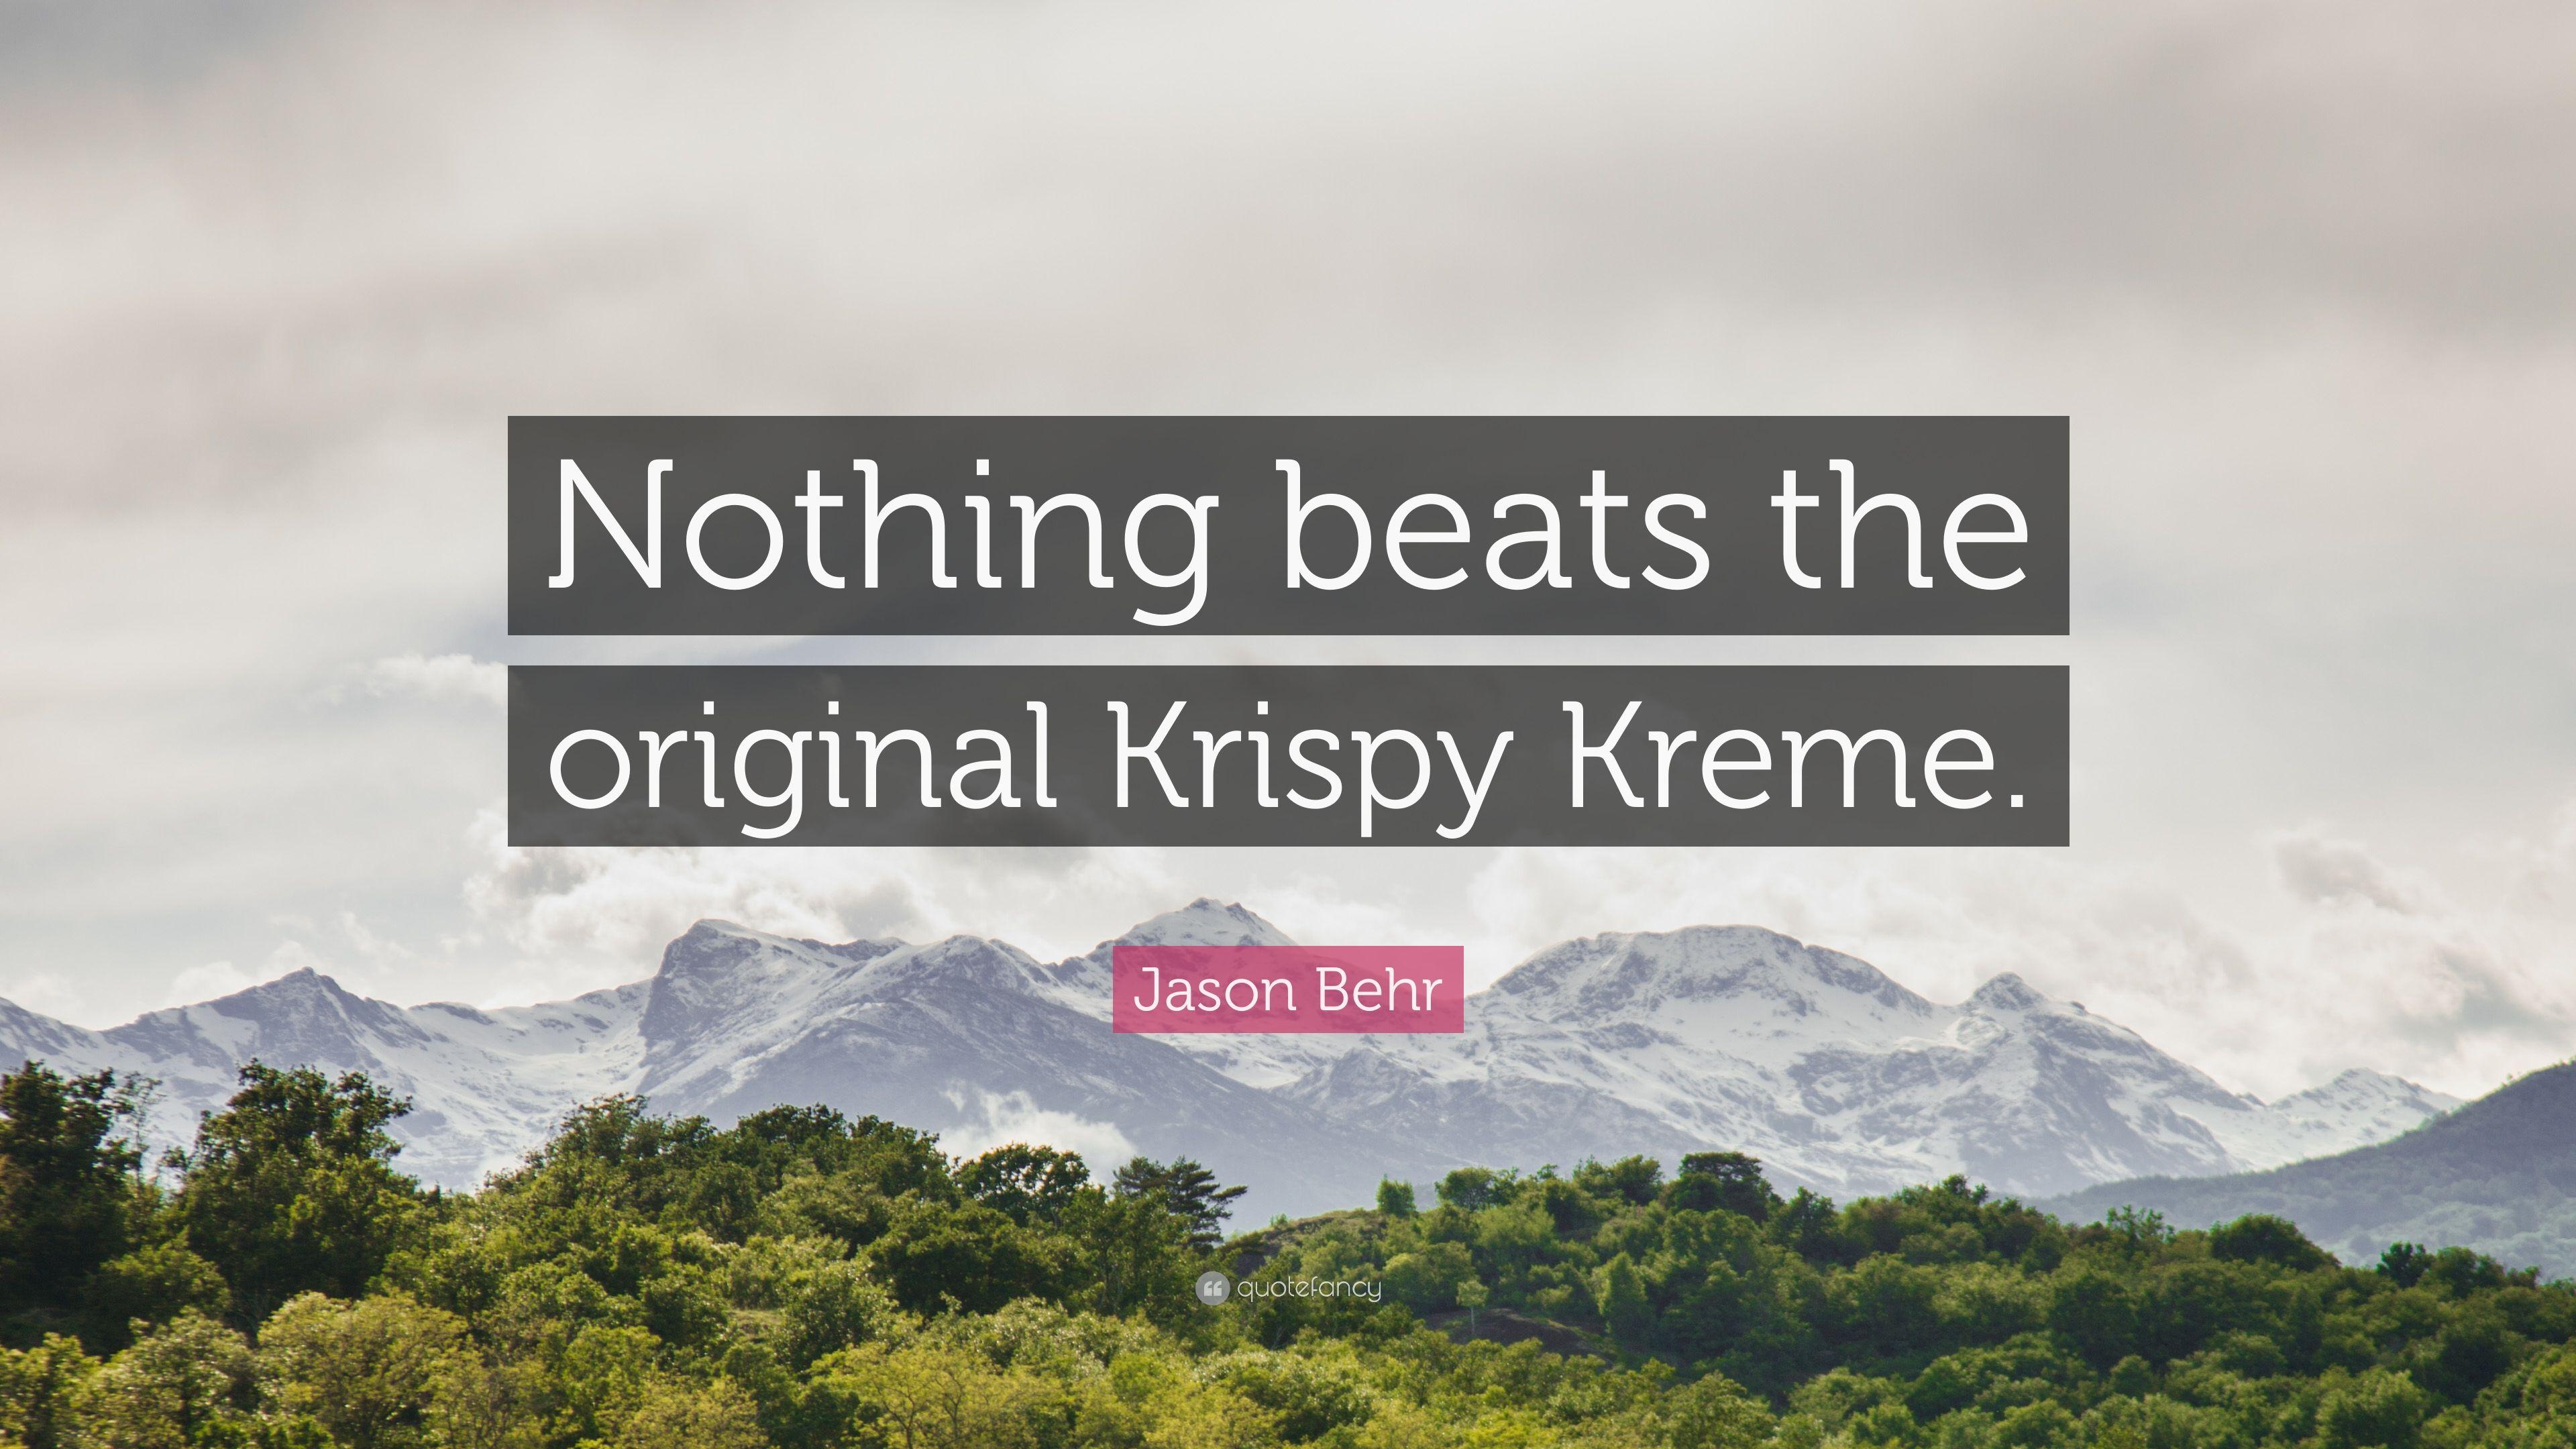 Jason Behr Quote: “Nothing beats the original Krispy Kreme.” 7